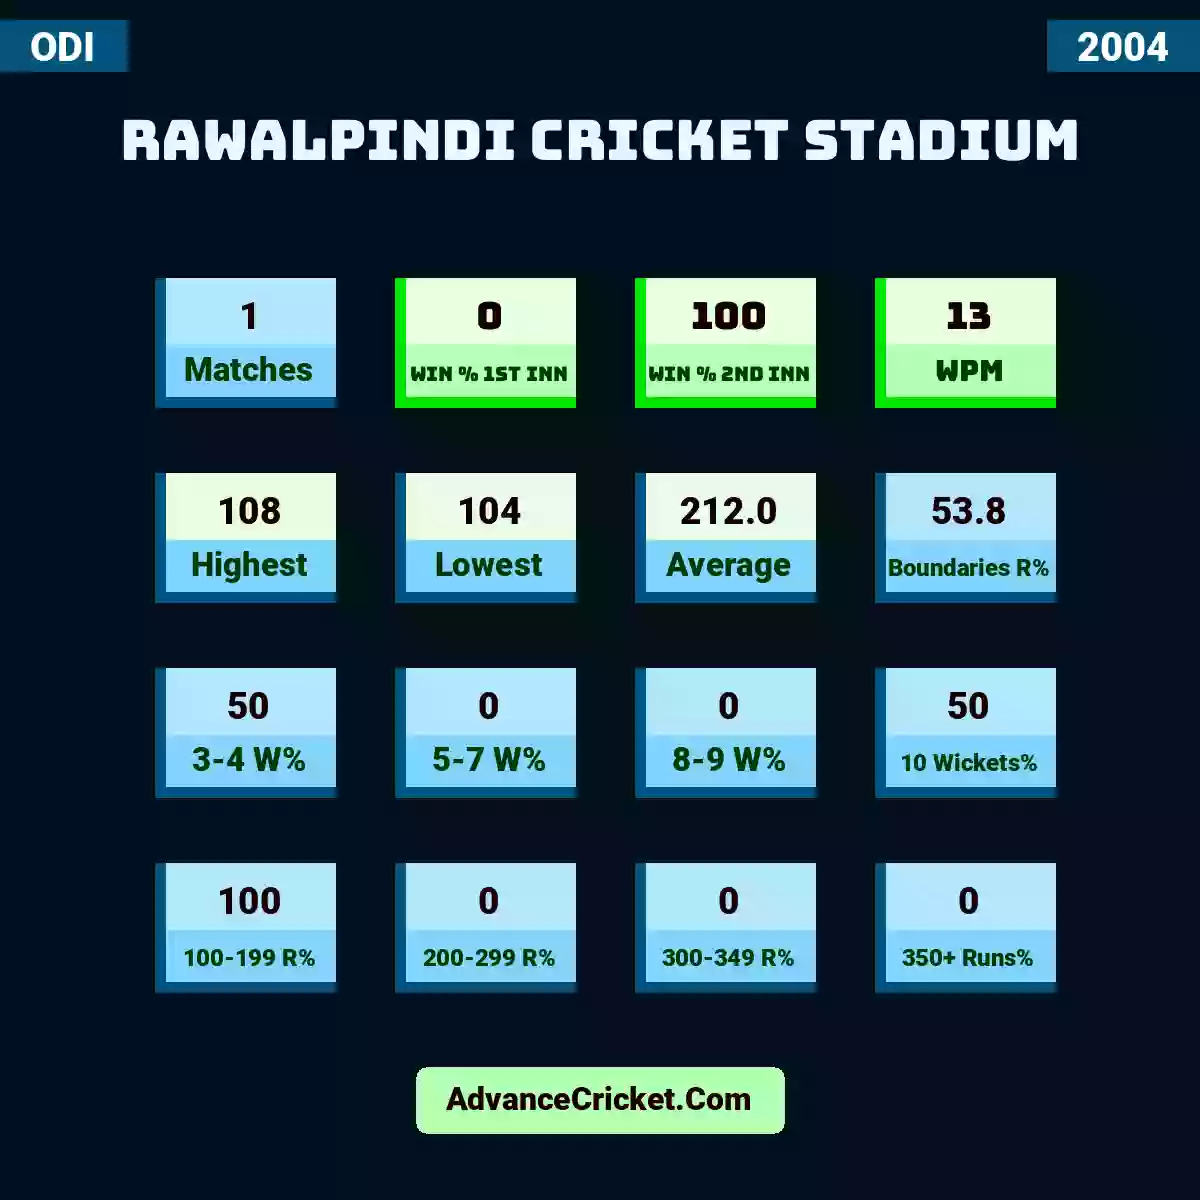 Image showing Rawalpindi Cricket Stadium with Matches: 1, Win % 1st Inn: 0, Win % 2nd Inn: 100, WPM: 13, Highest: 108, Lowest: 104, Average: 212.0, Boundaries R%: 53.8, 3-4 W%: 50, 5-7 W%: 0, 8-9 W%: 0, 10 Wickets%: 50, 100-199 R%: 100, 200-299 R%: 0, 300-349 R%: 0, 350+ Runs%: 0.